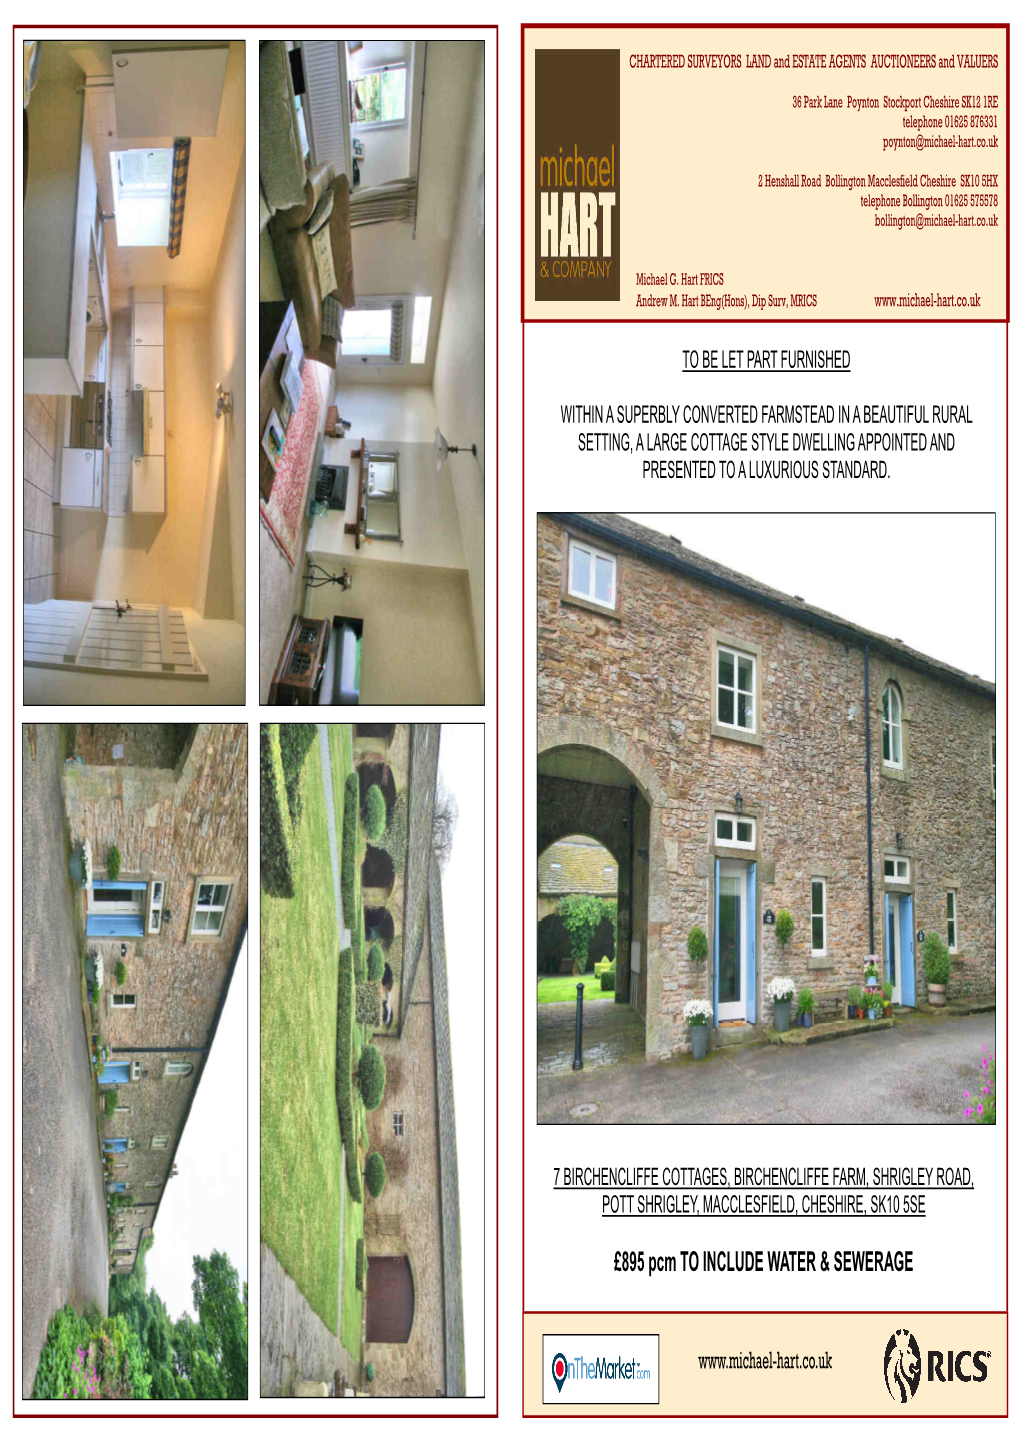 7 Birchencliffe Cottages, Birchencliffe Farm, Shrigley Road, Pott Shrigley, Macclesfield, Cheshire, Sk10 5Se